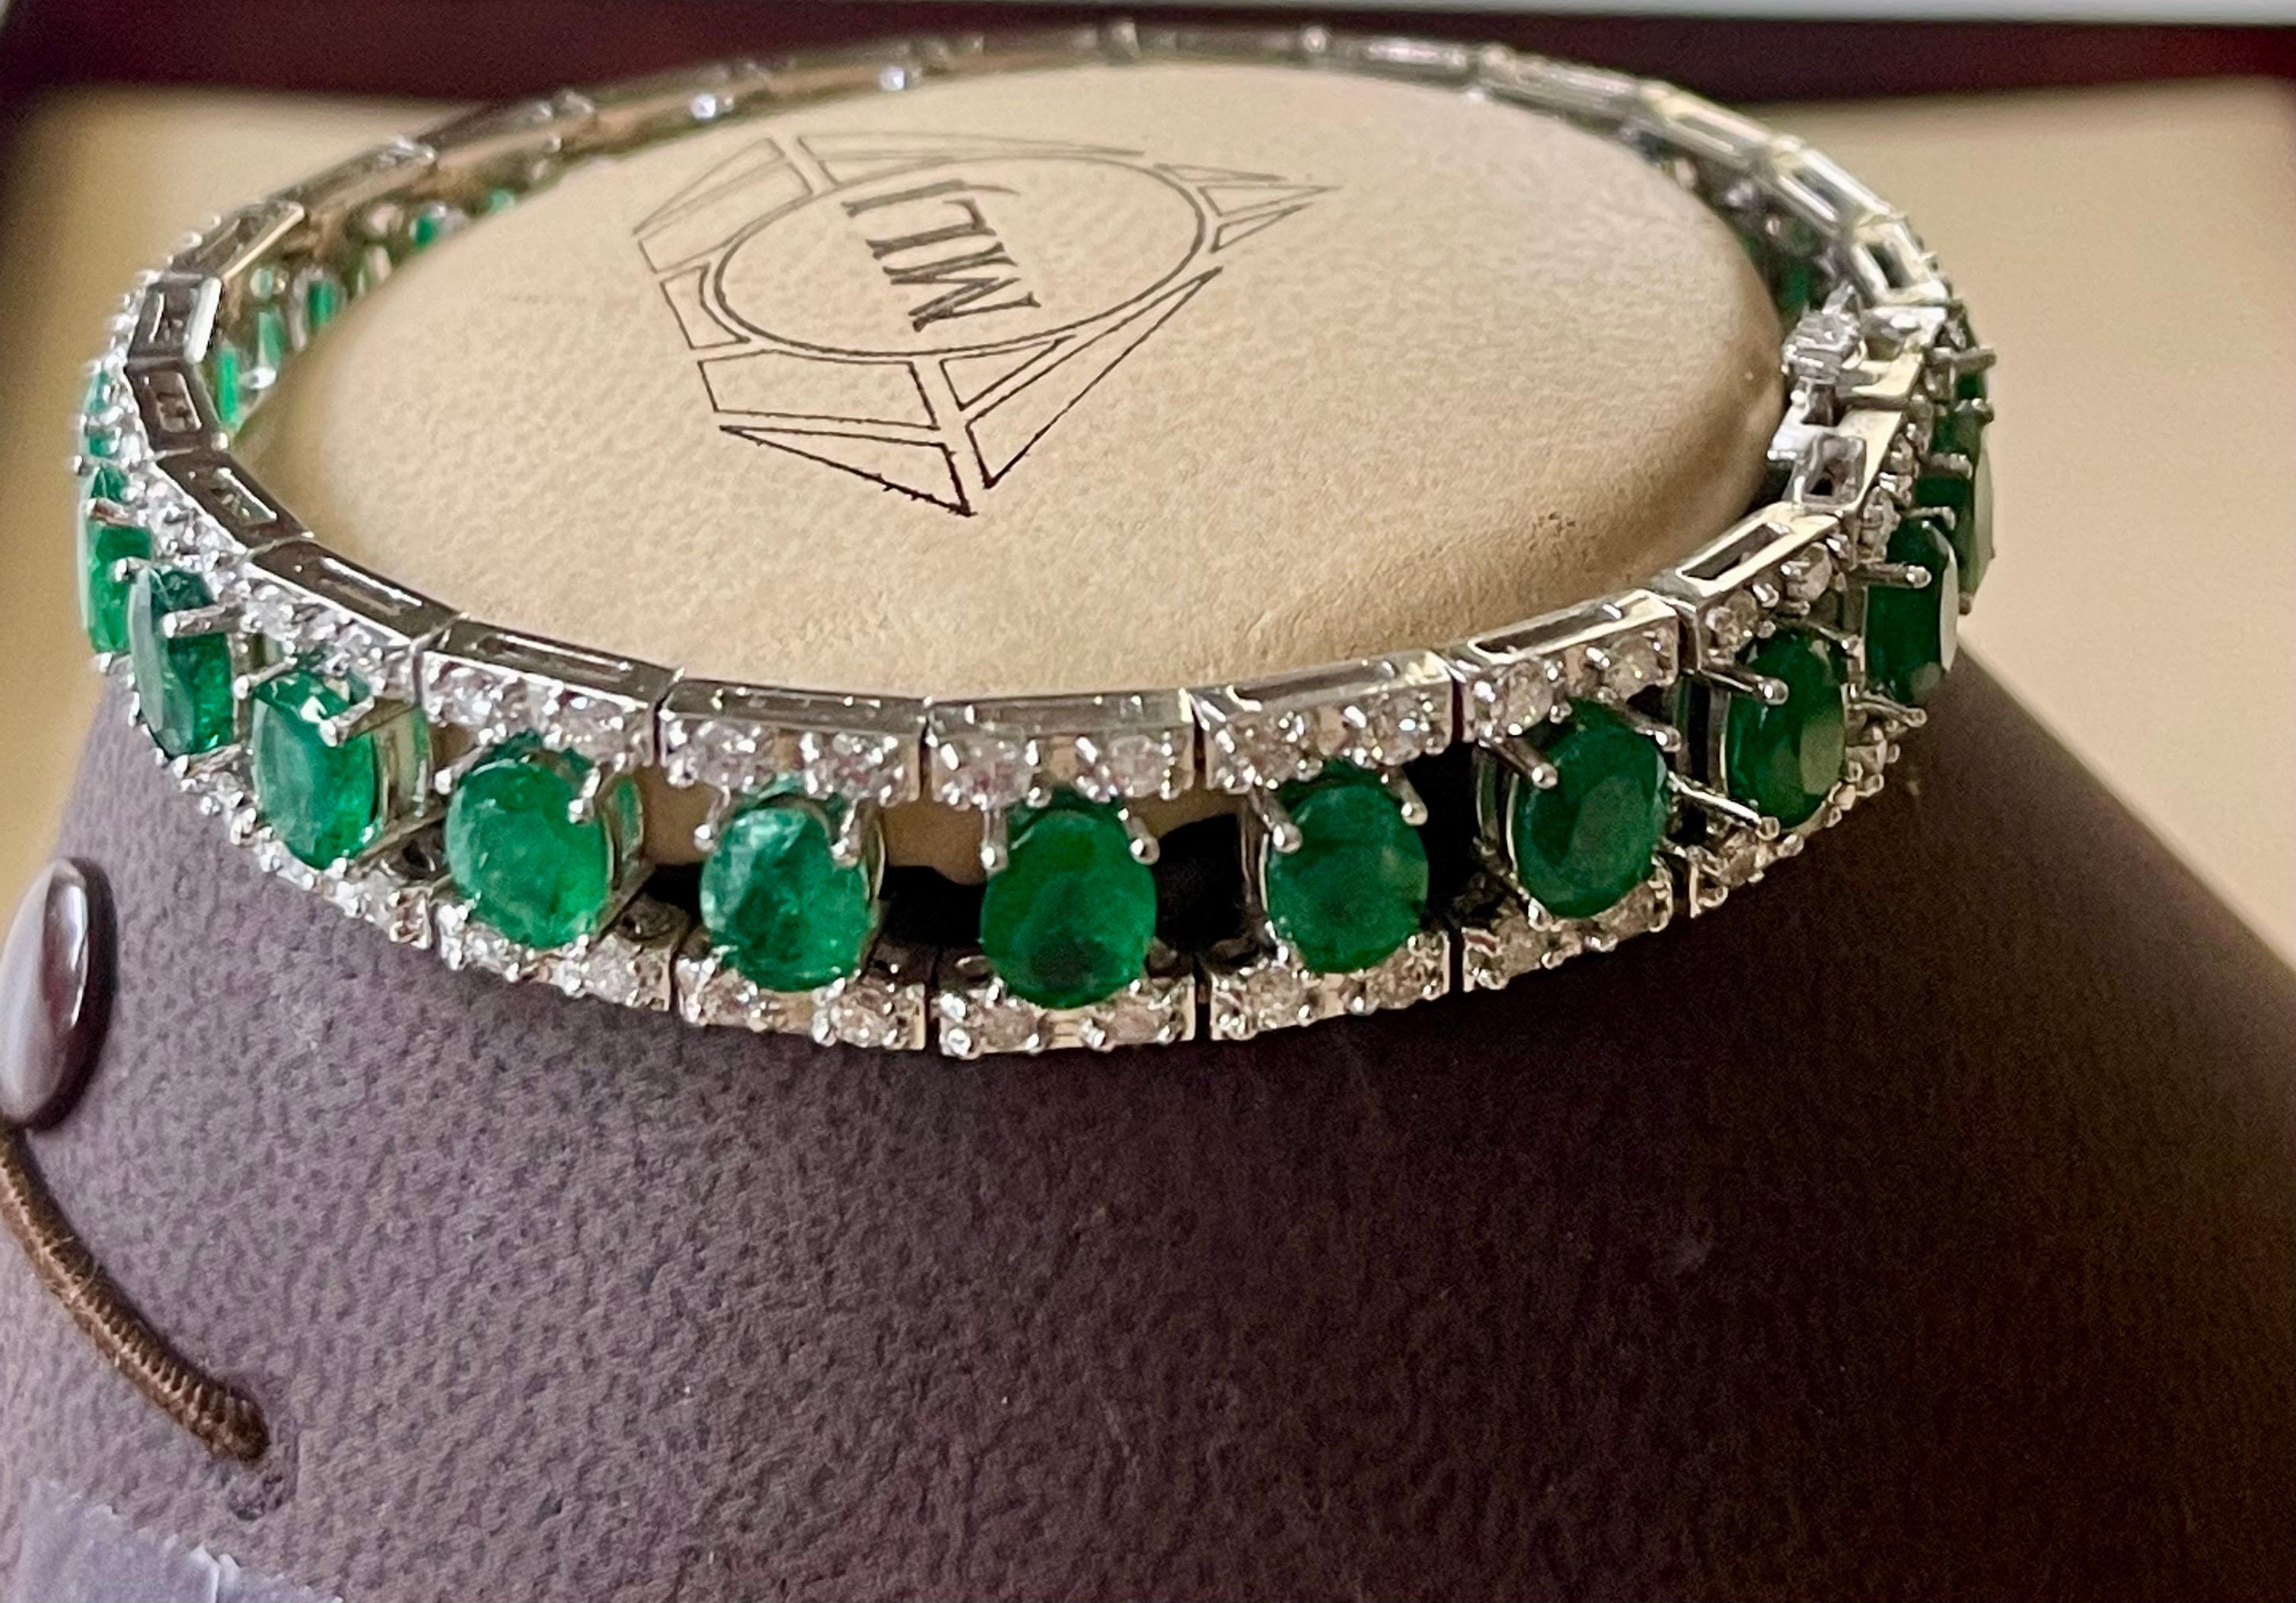 Oval Cut 18 Carat Natural Emerald & Diamond Cocktail Tennis Bracelet 14 Karat White Gold